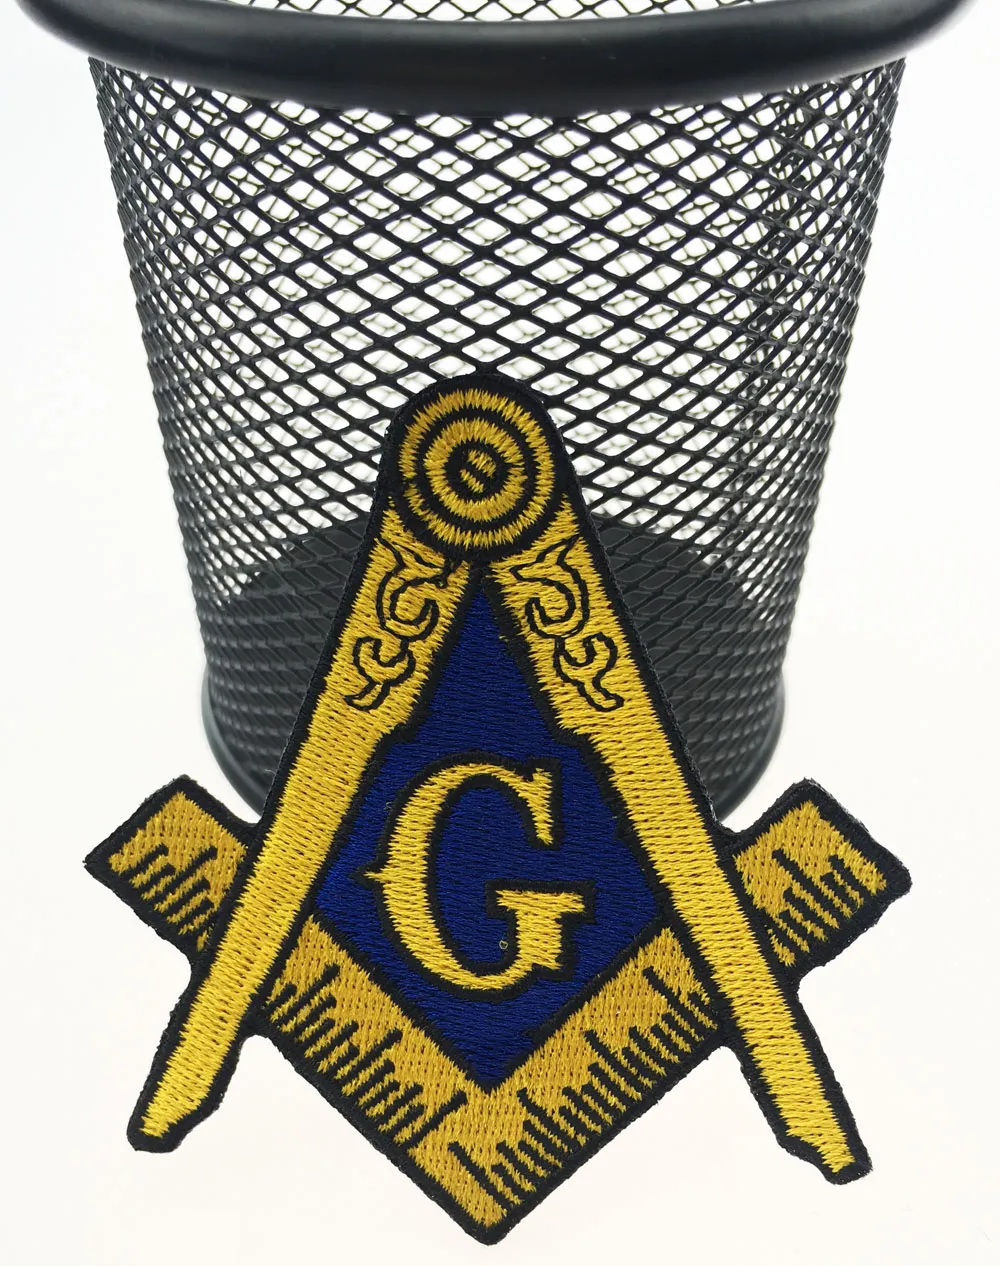 Hot Sale! Masonic Logo Patch Embroidered Iron-On Clothing Freemason Lodge Emblem Mason G Square Compass Patch Sew On Any Garment